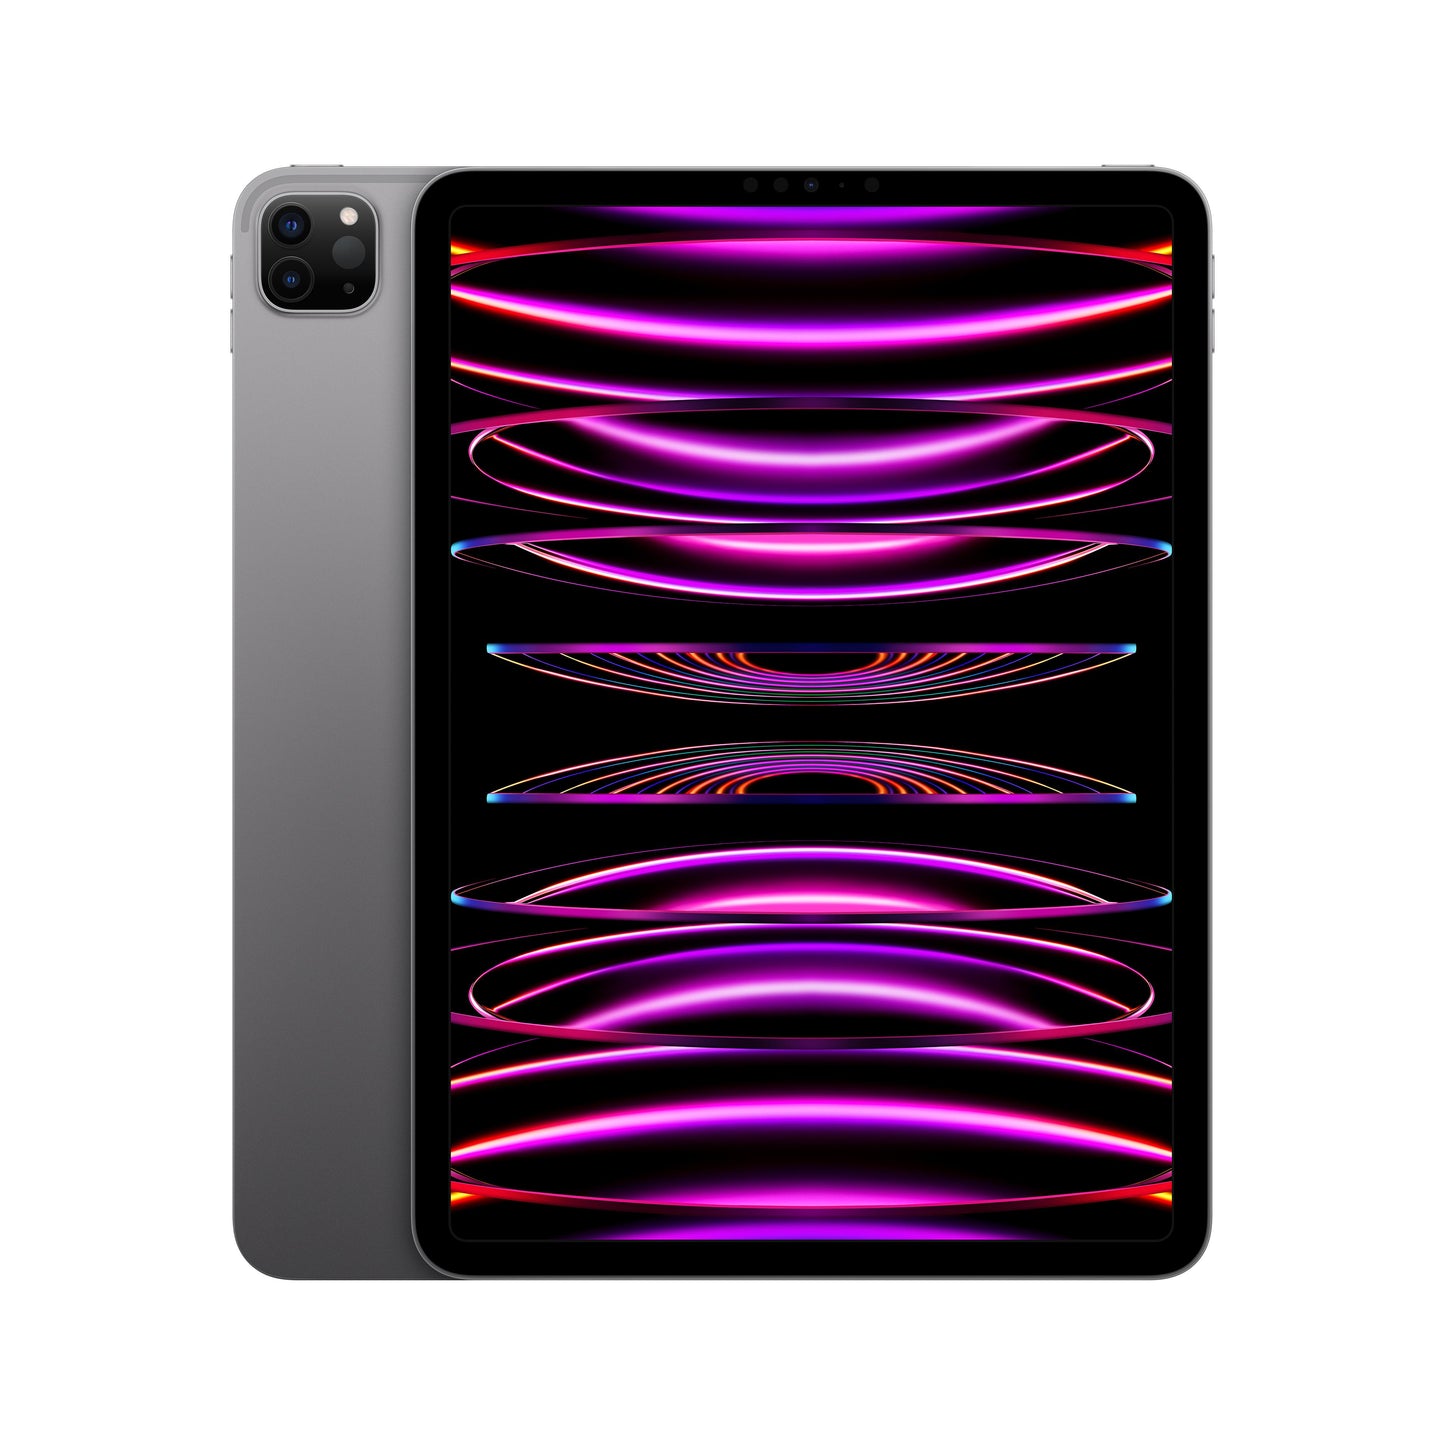 2022 11-inch iPad Pro Wi-Fi 256GB - Space Grey (4th generation)